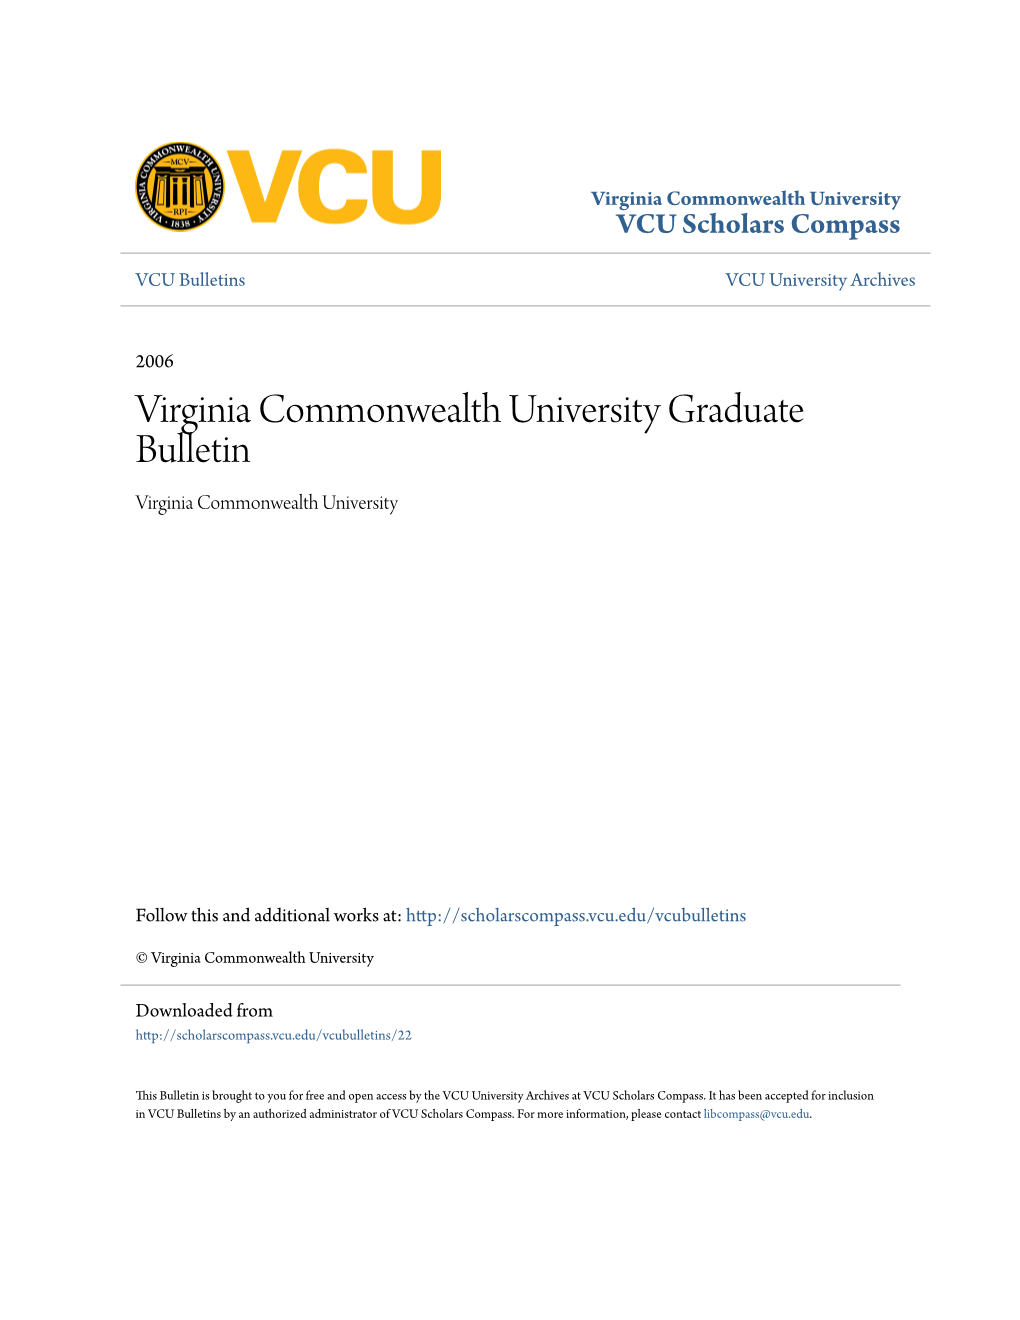 Virginia Commonwealth University Graduate Bulletin Virginia Commonwealth University